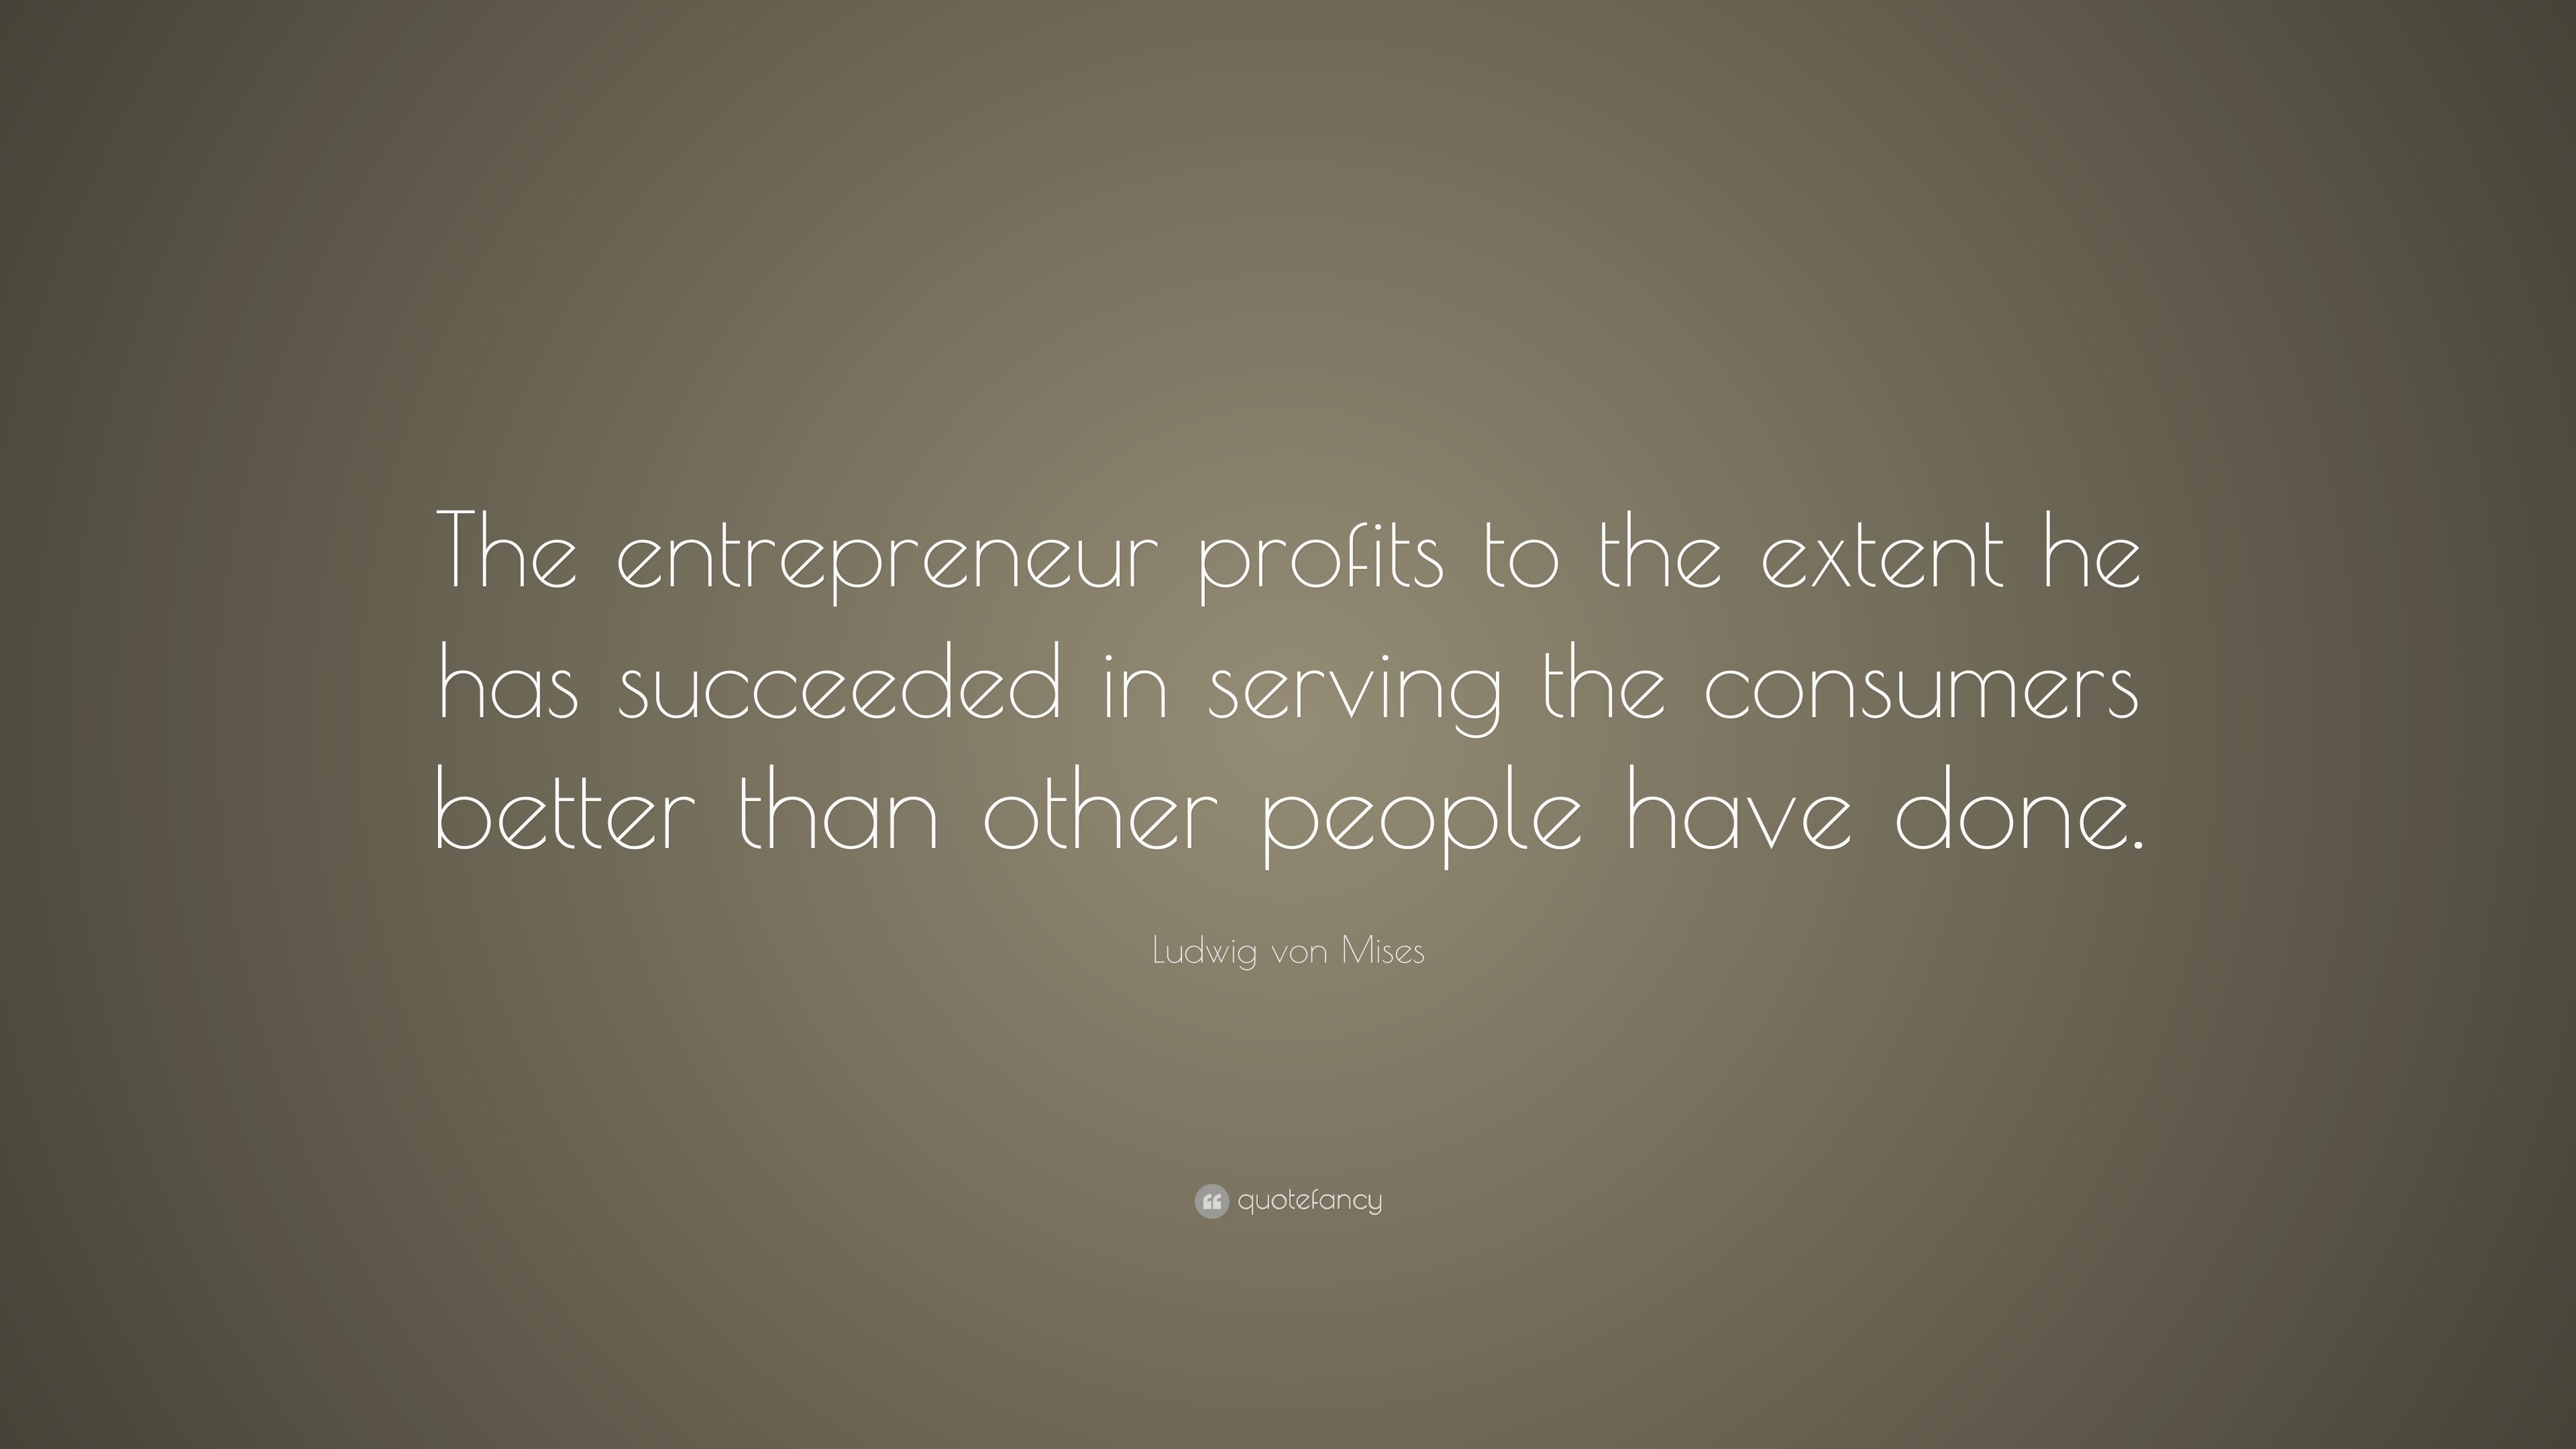 Ludwig von Mises Quote: “The entrepreneur profits to the extent he has ...